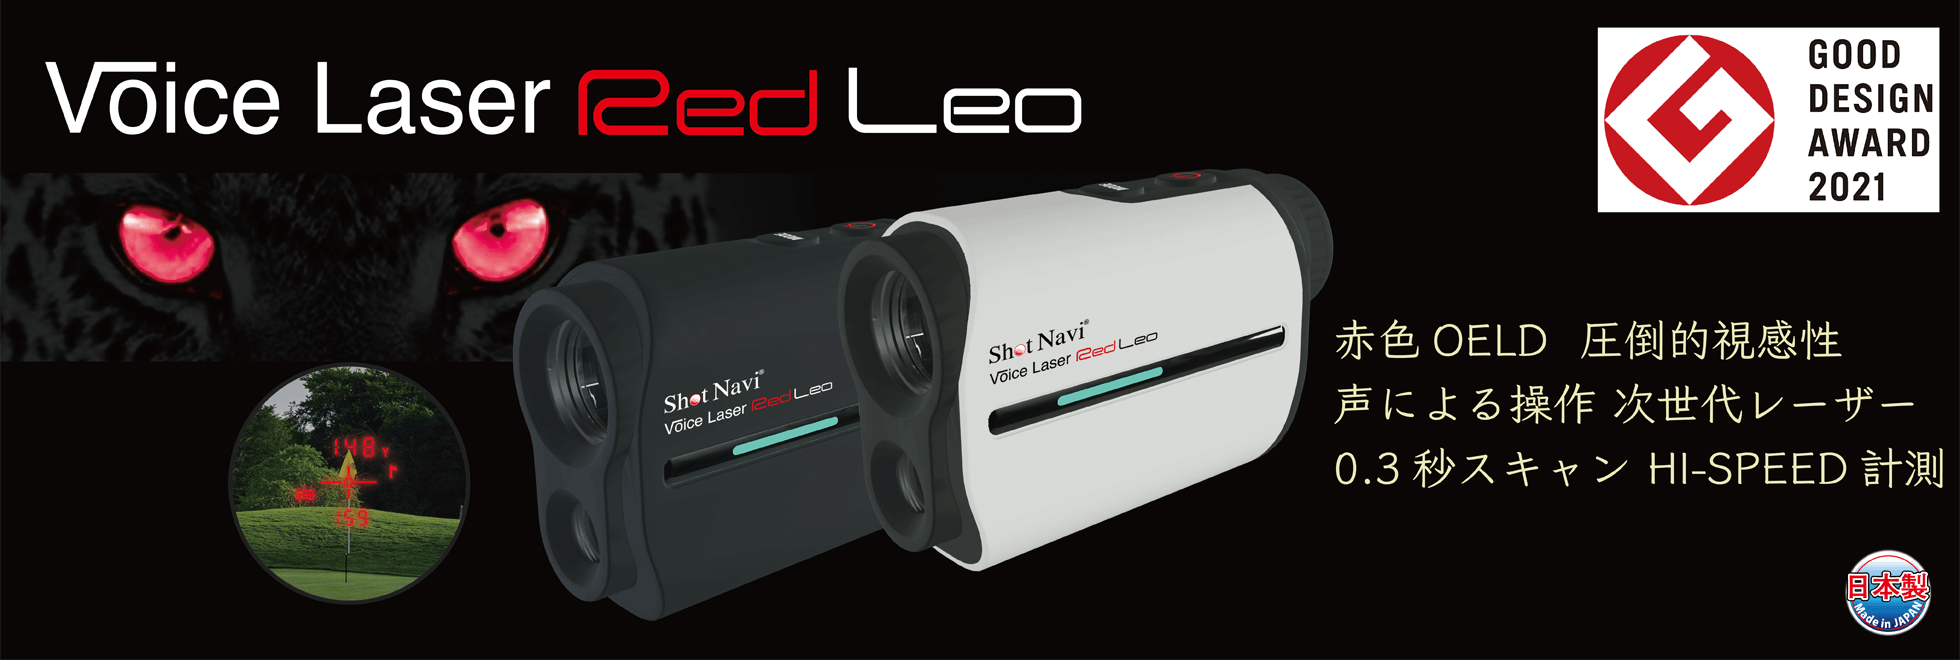 Voice Laser Red Leo : グッドデザイン賞2021受賞!赤色OLED、音声操作 